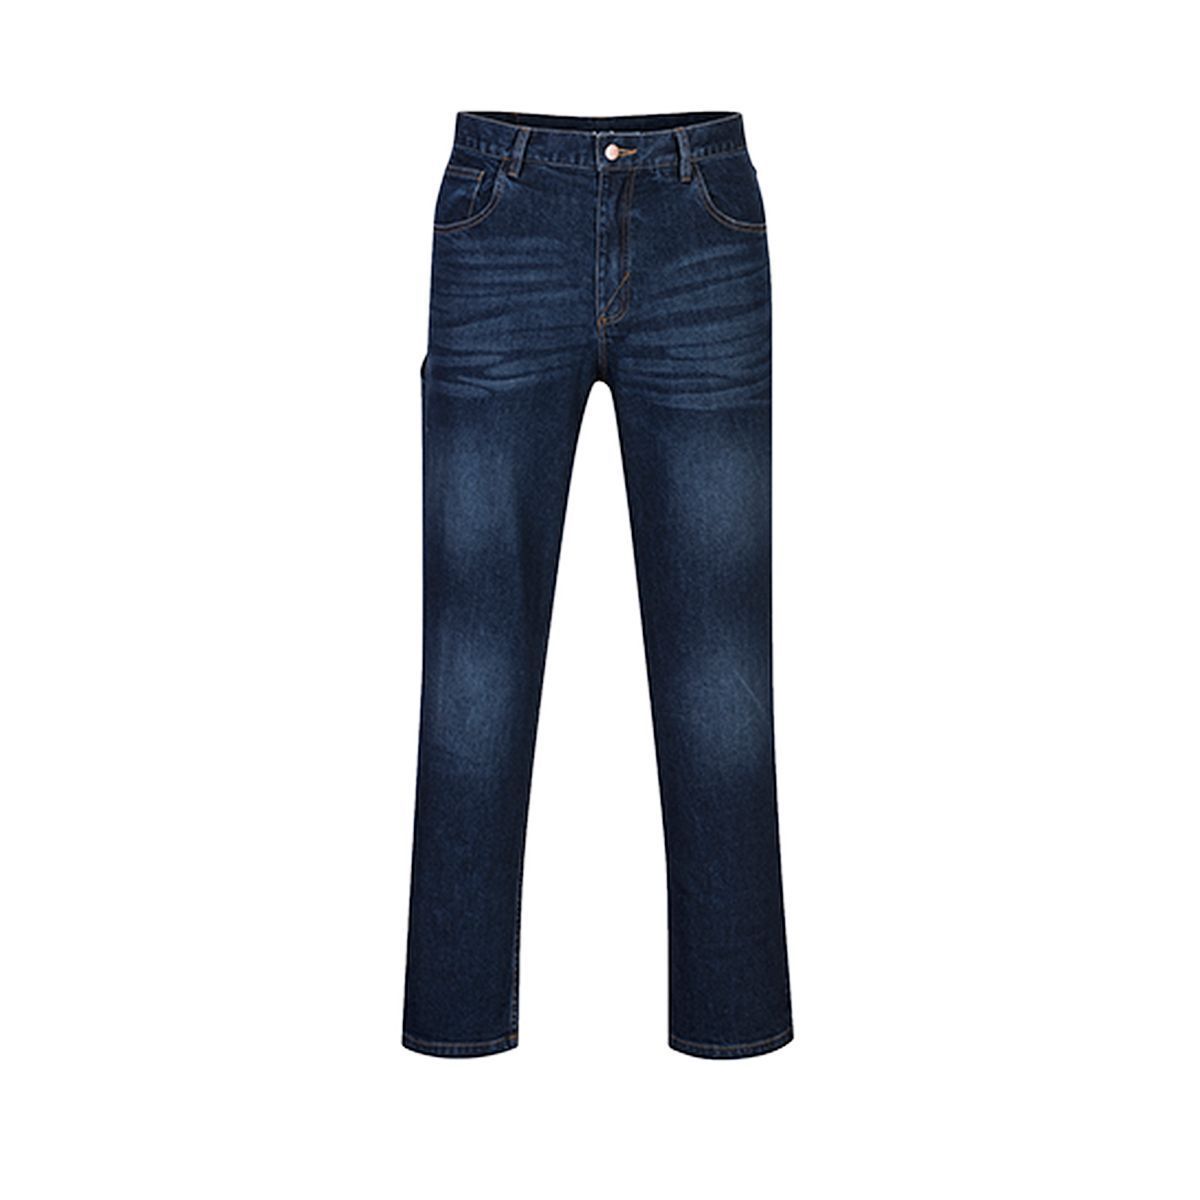 Style FR54 Style FR54 FR Stretch Denim Jeans-1